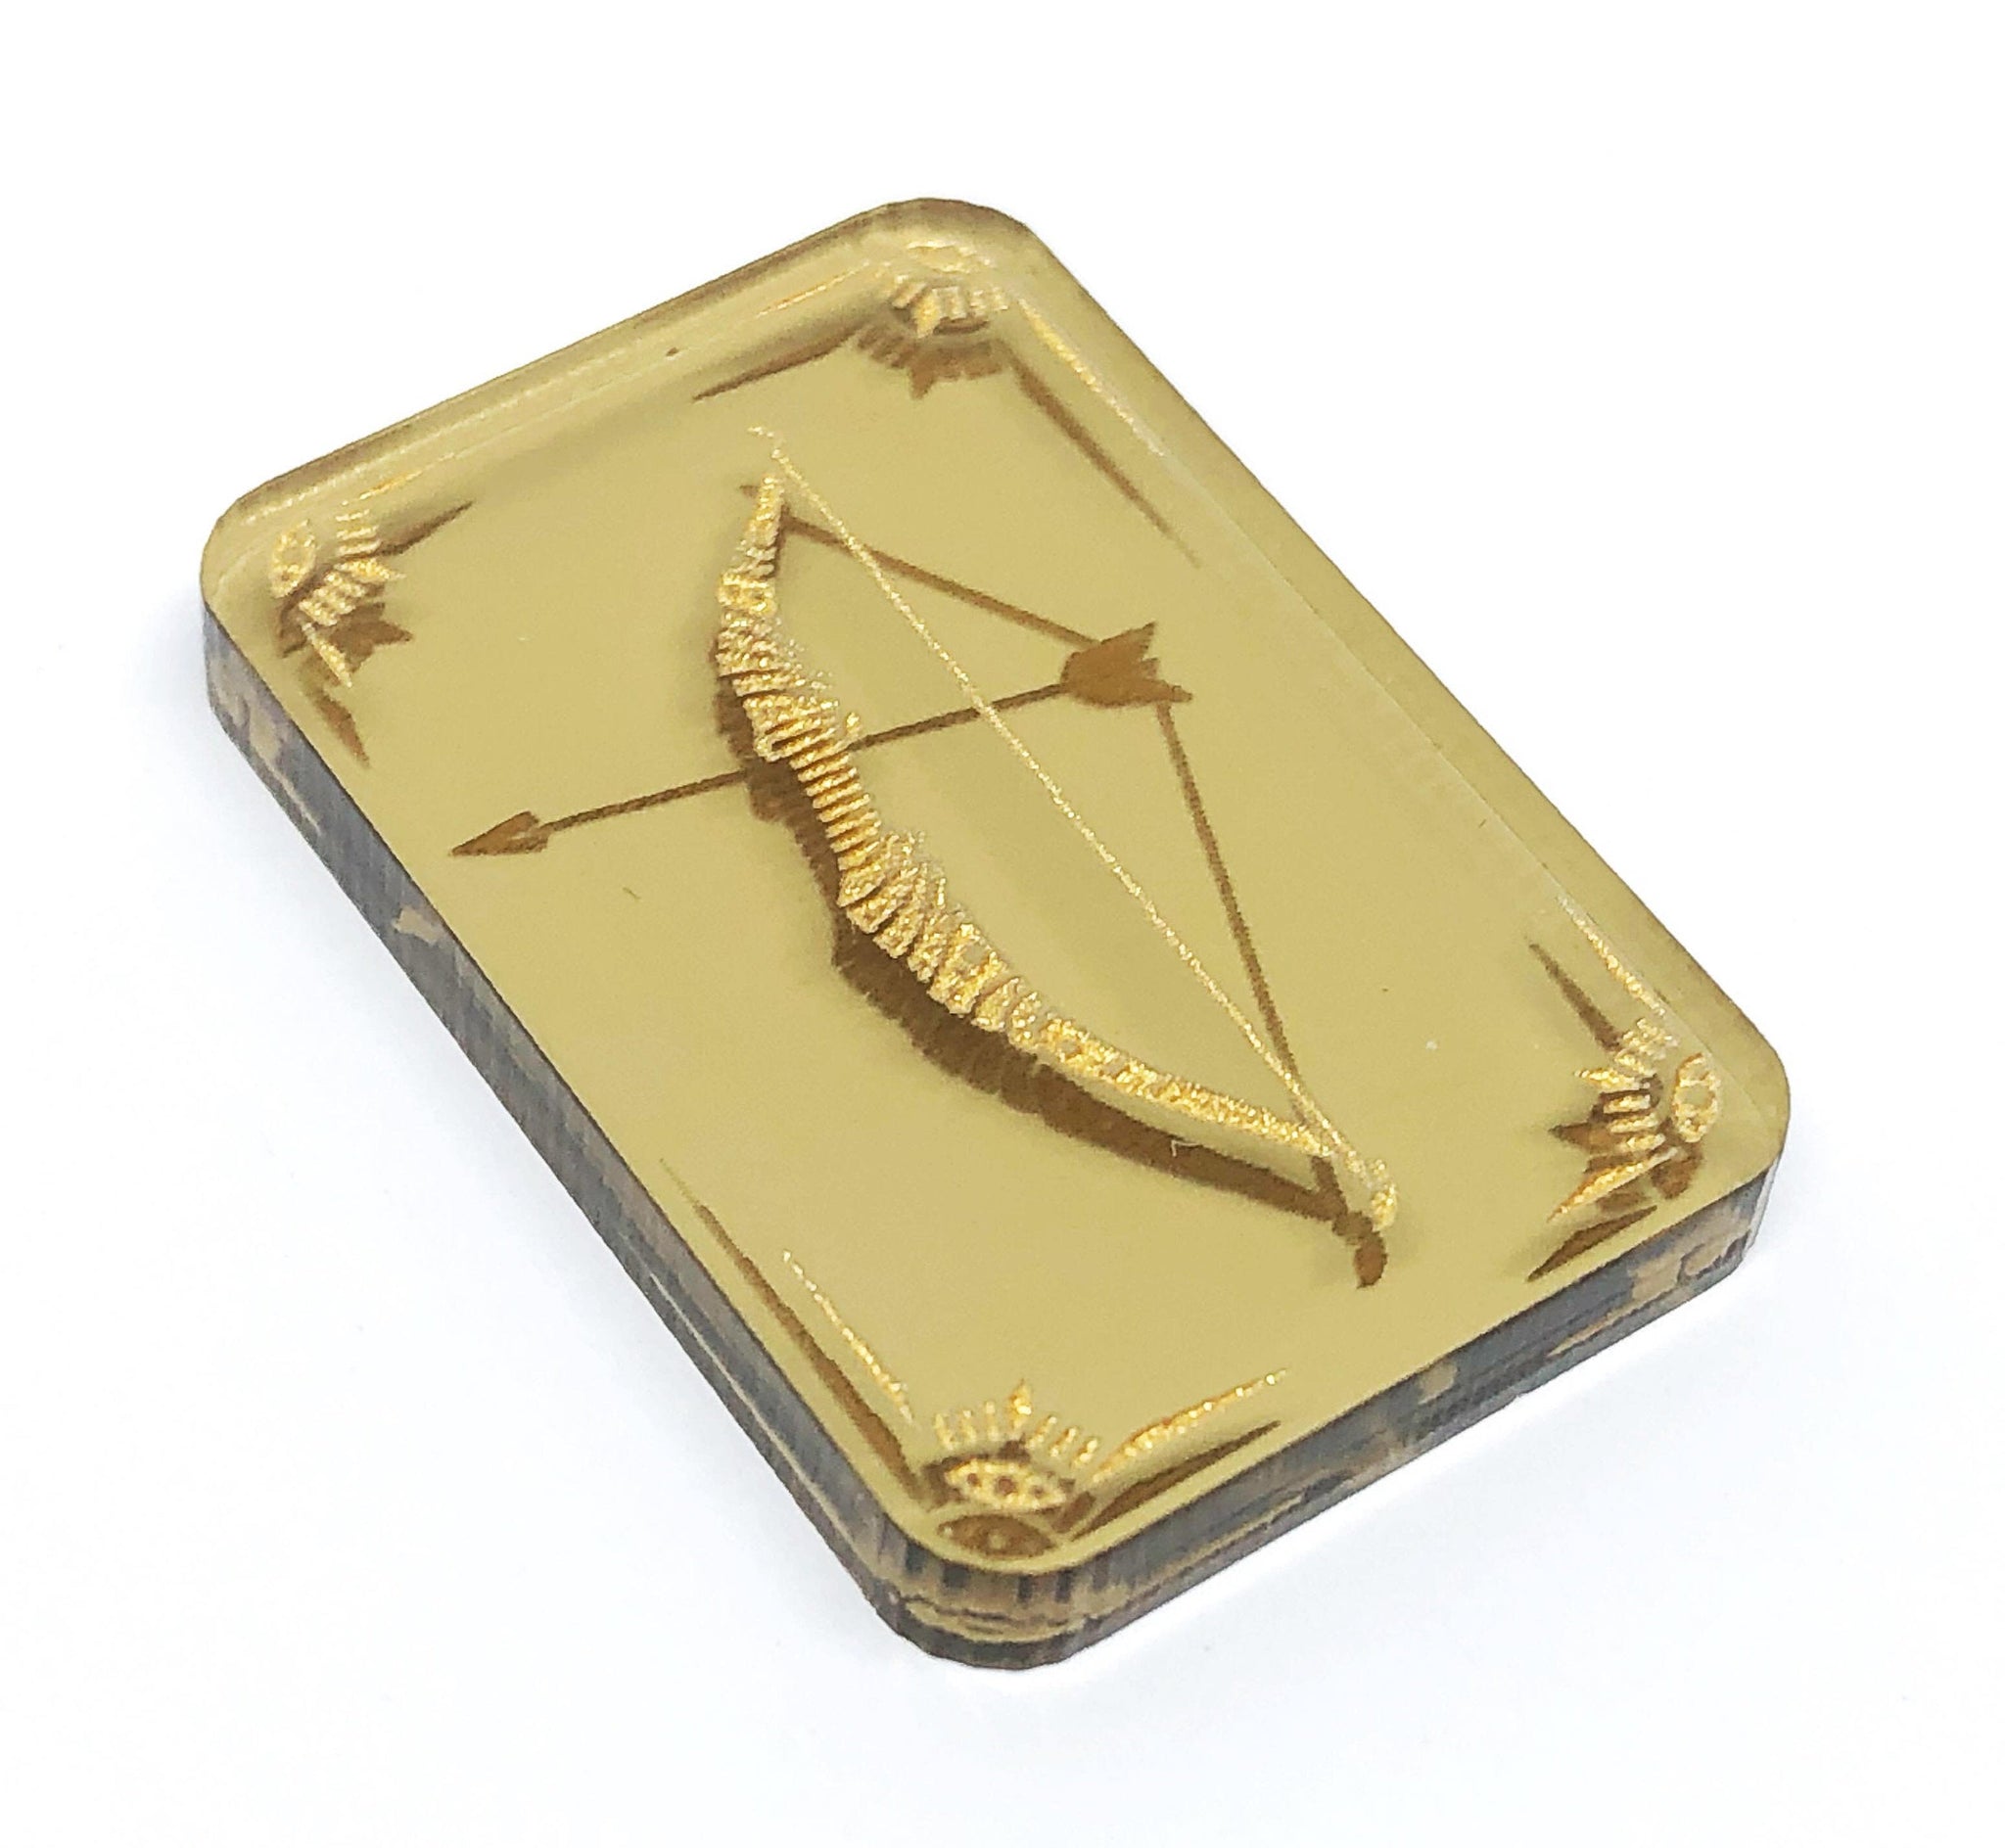 1 x Ornate Bow token (double sided) for Arkham Horror LCG